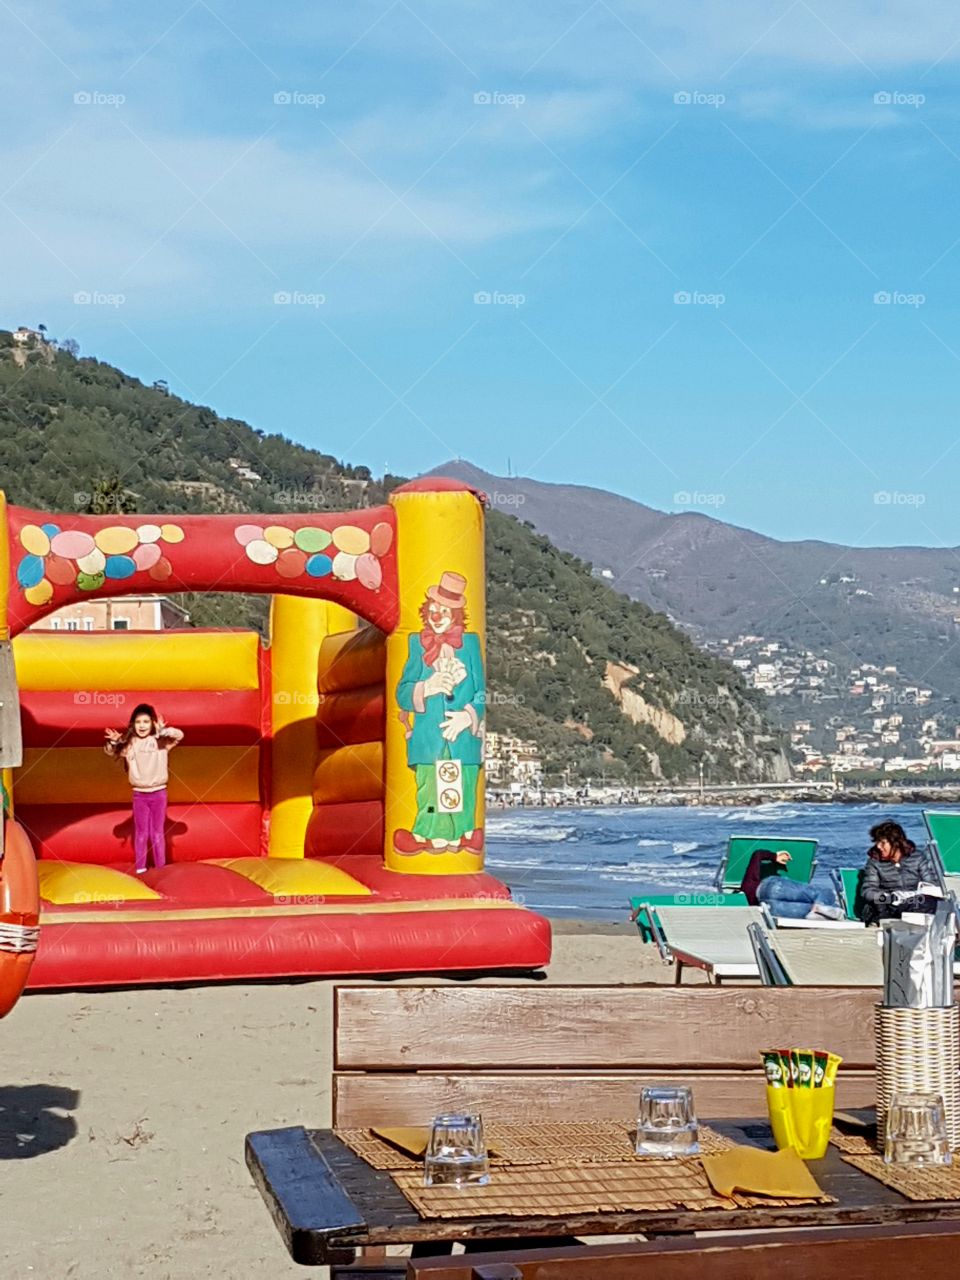 Fun on the beach in a sunny day in italian Riviera